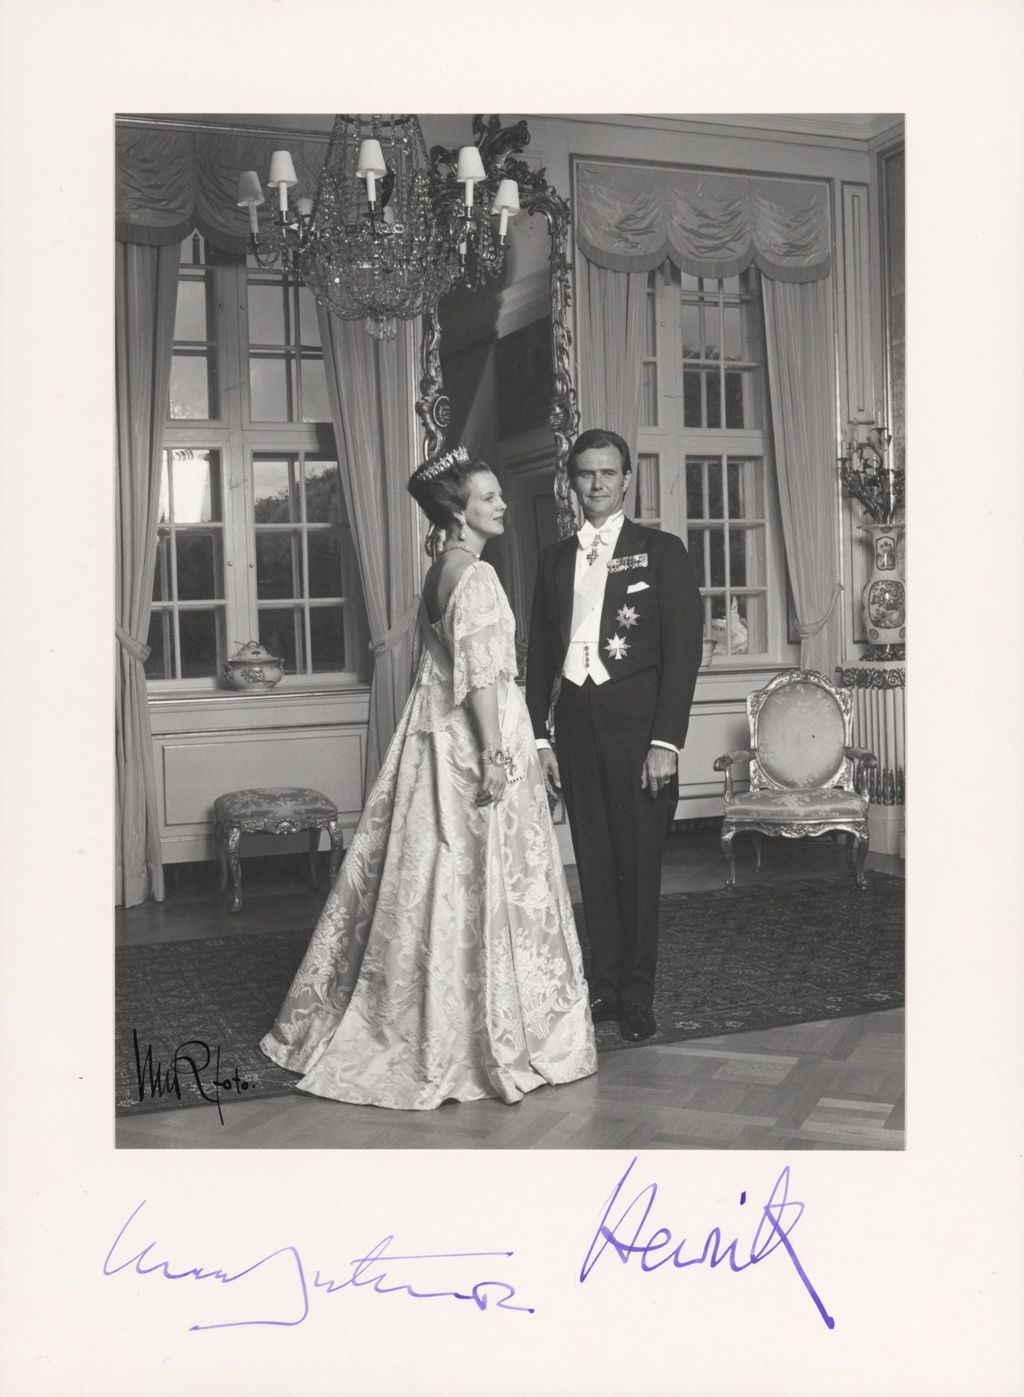 Queen Margrethe II of Denmark and Prince Henrik